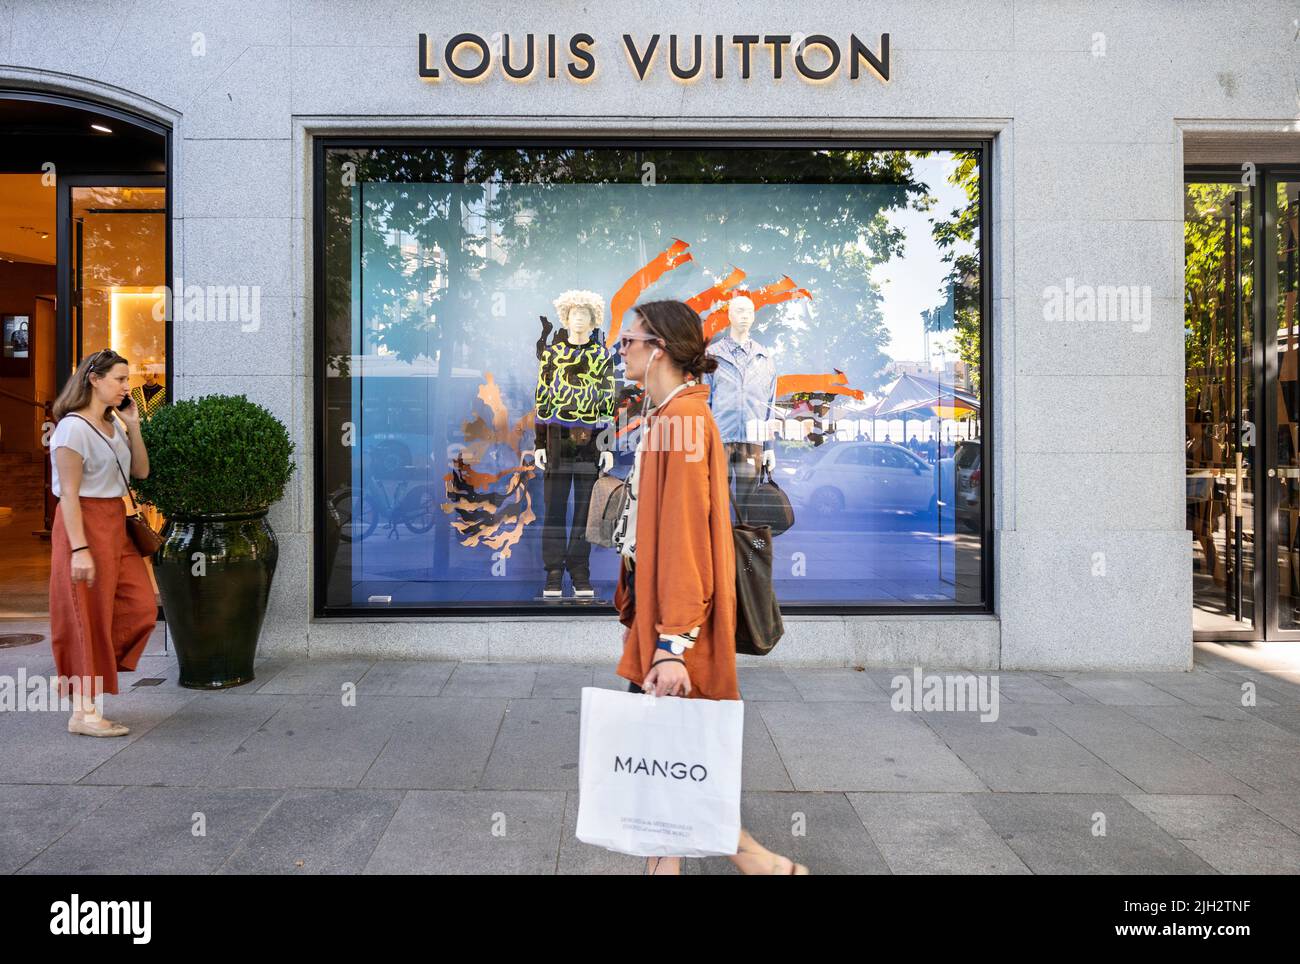 Louis Vuitton Madrid, Madrid